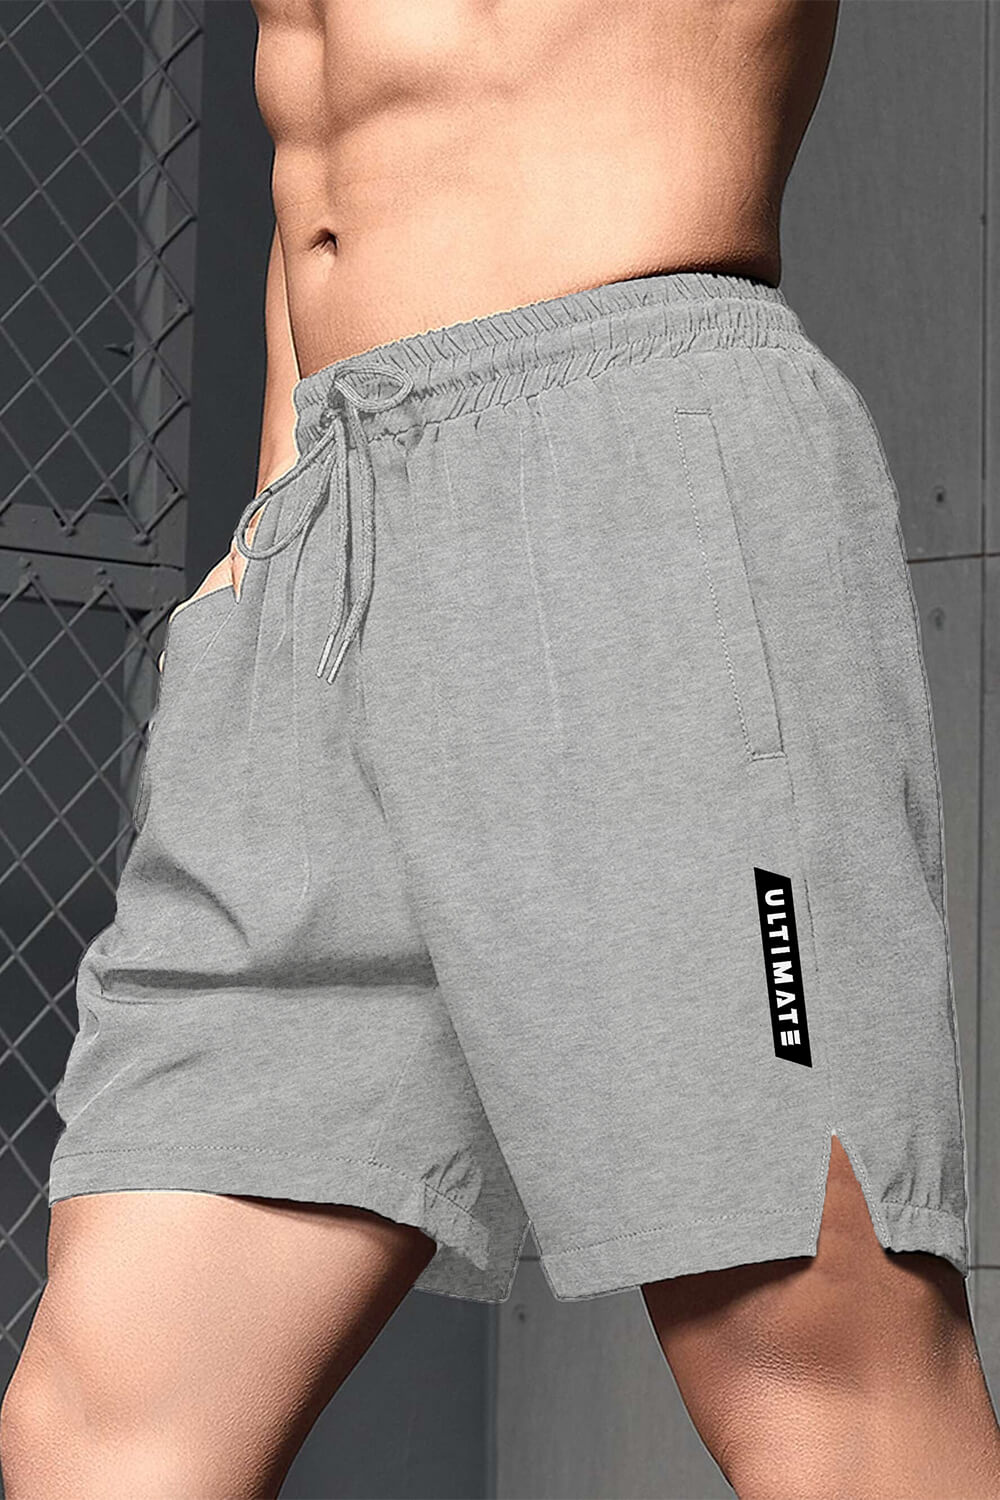 Ultimate Printed Shorts